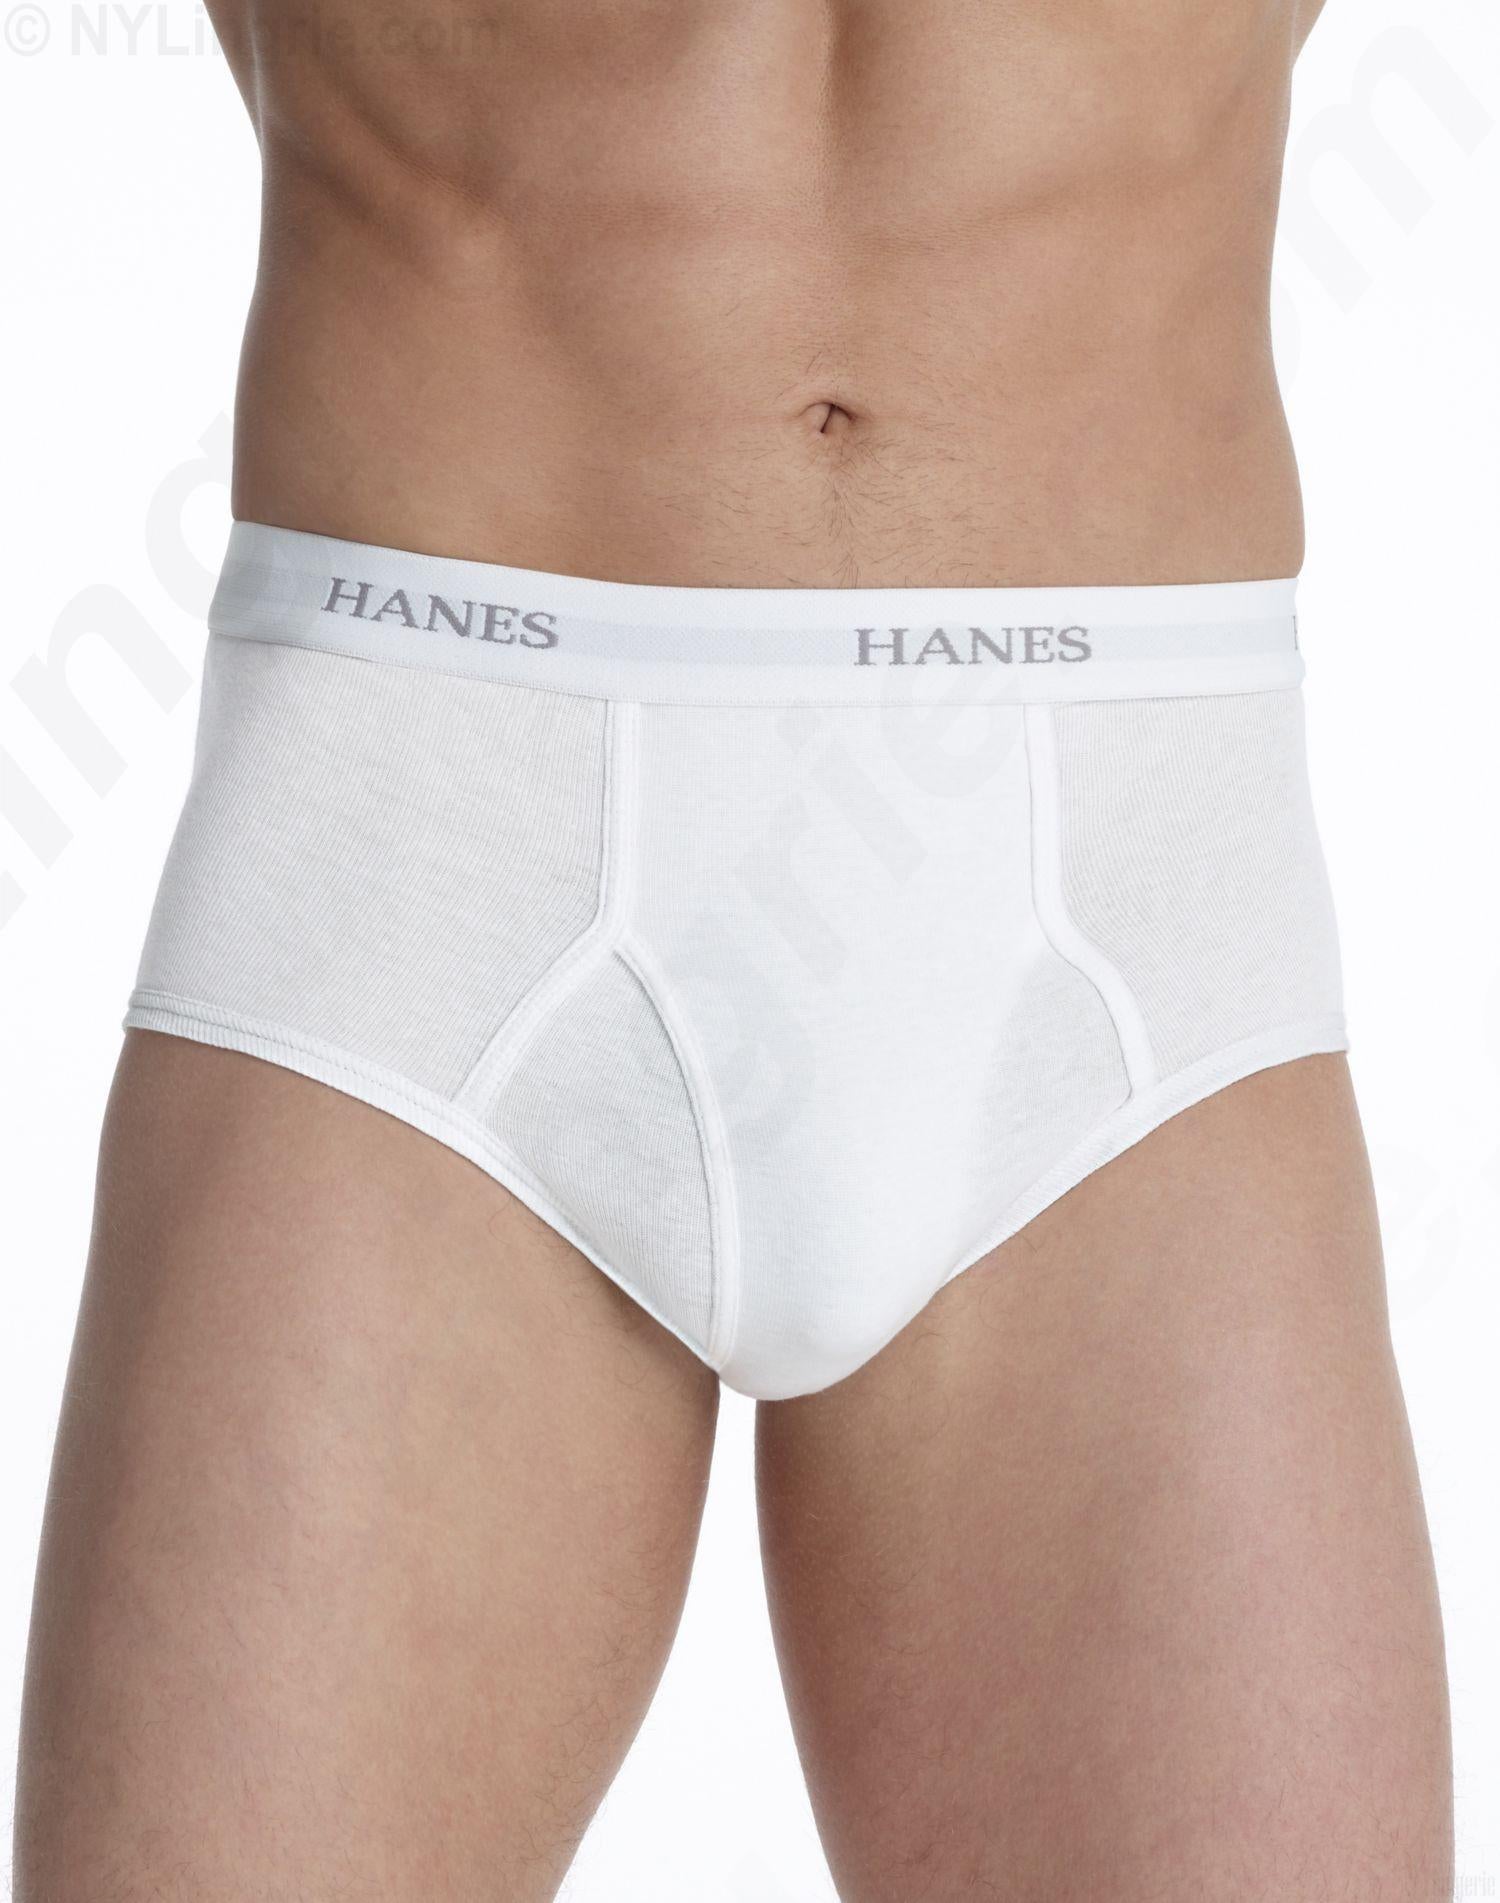 7764W7 - Hanes Classics Men's Briefs with Comfort Flex Waistband, White  7-Pack